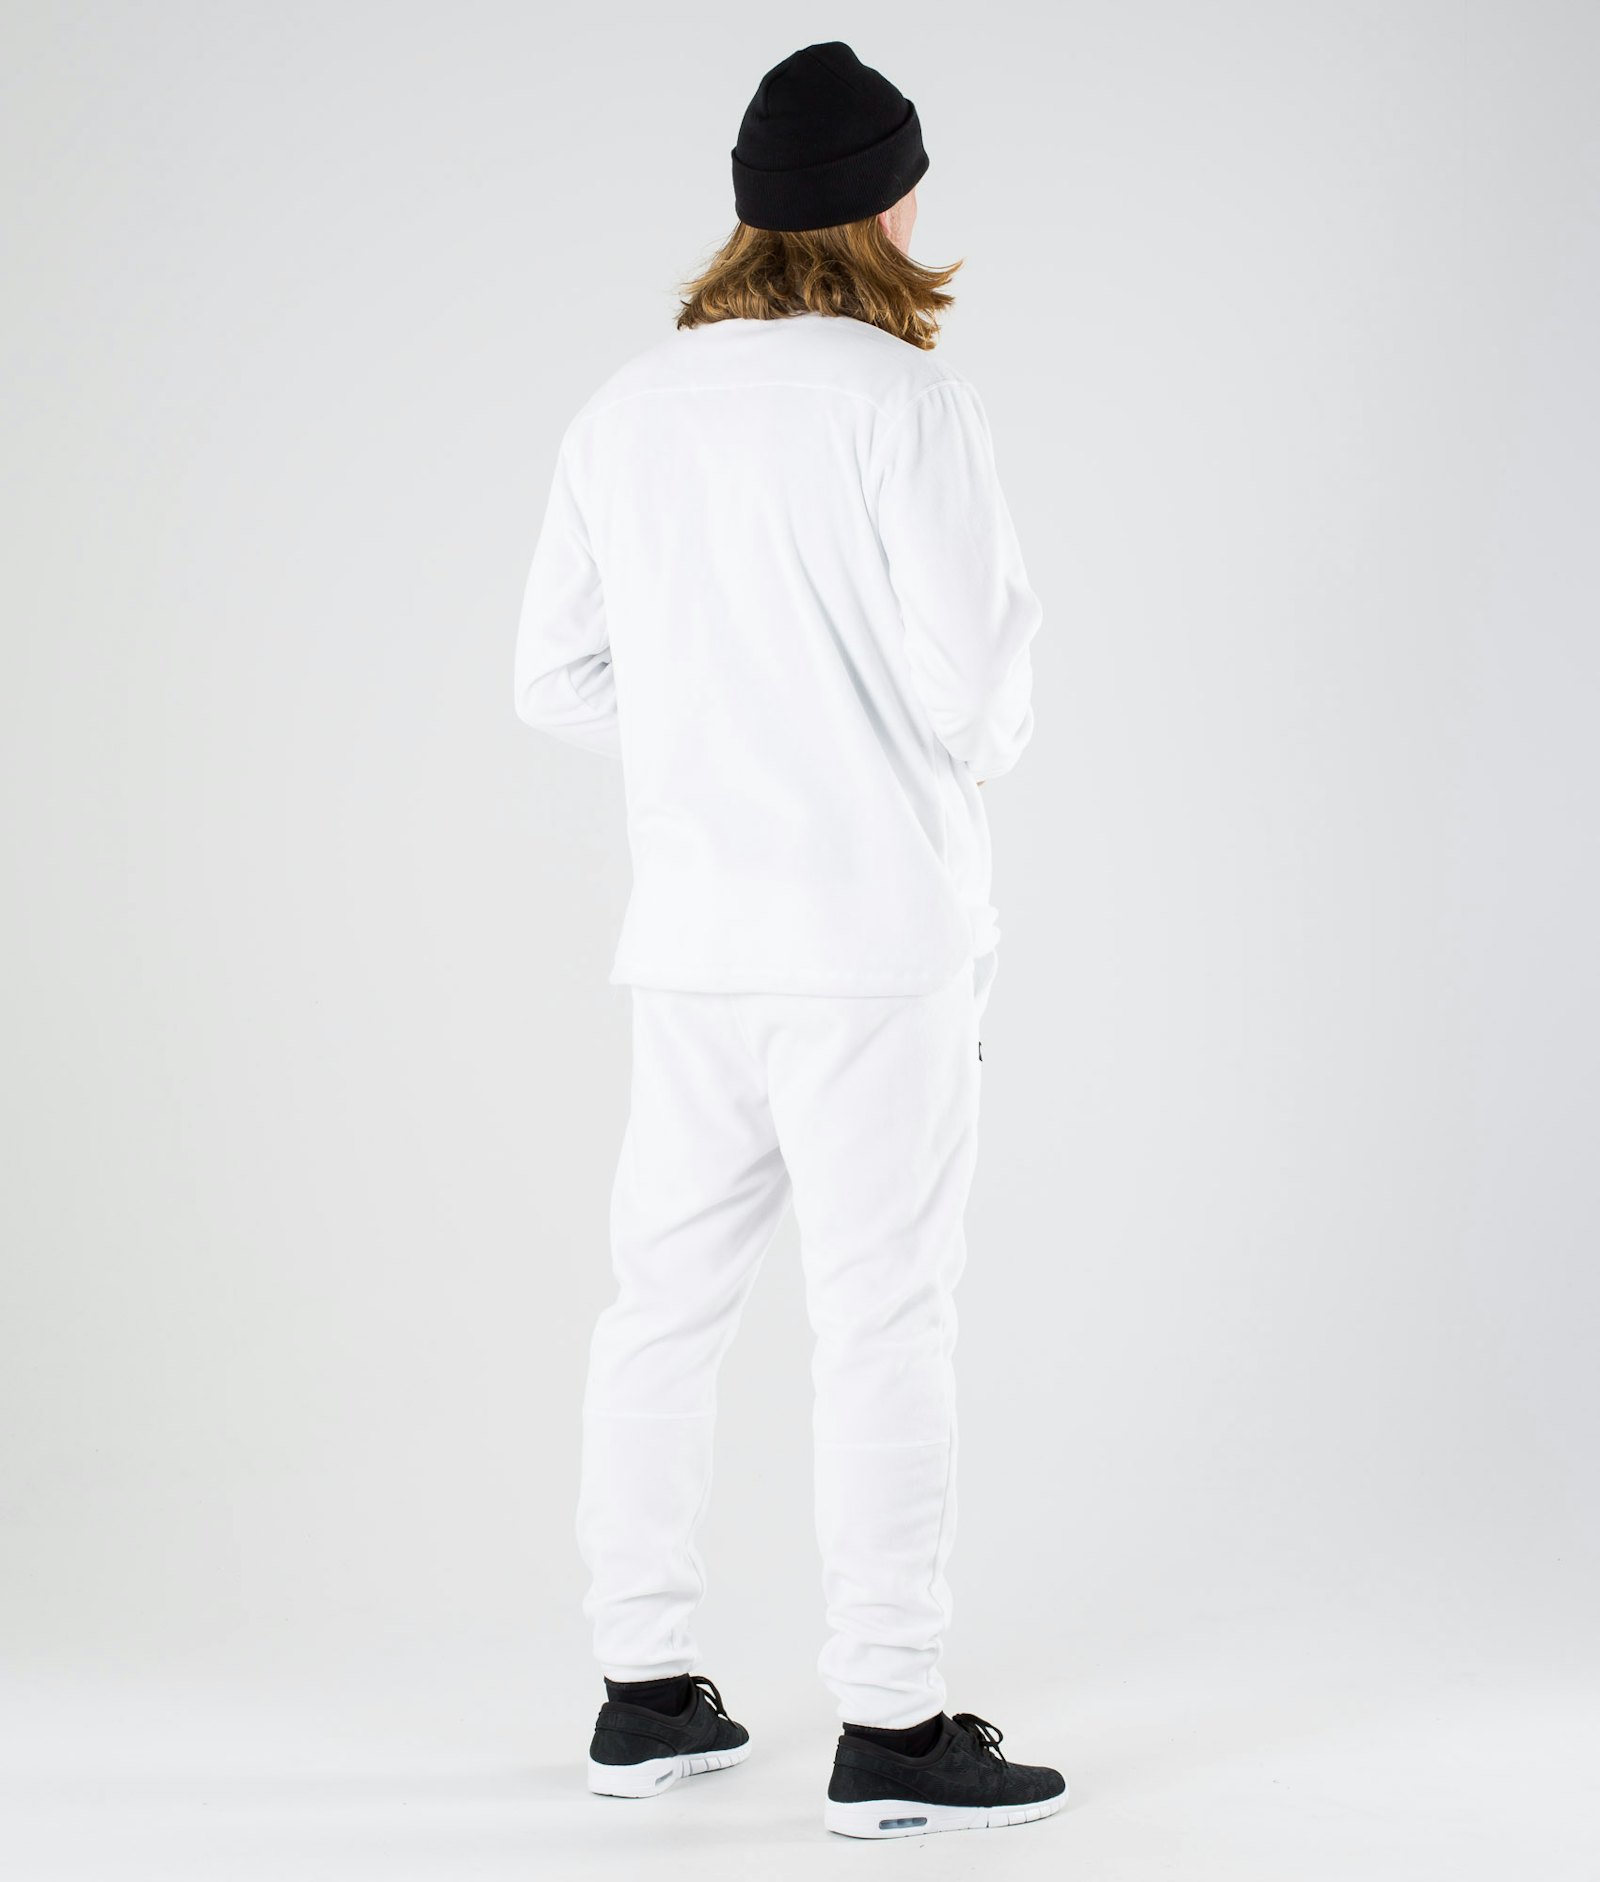 Echo 2019 フリースセーター メンズ White